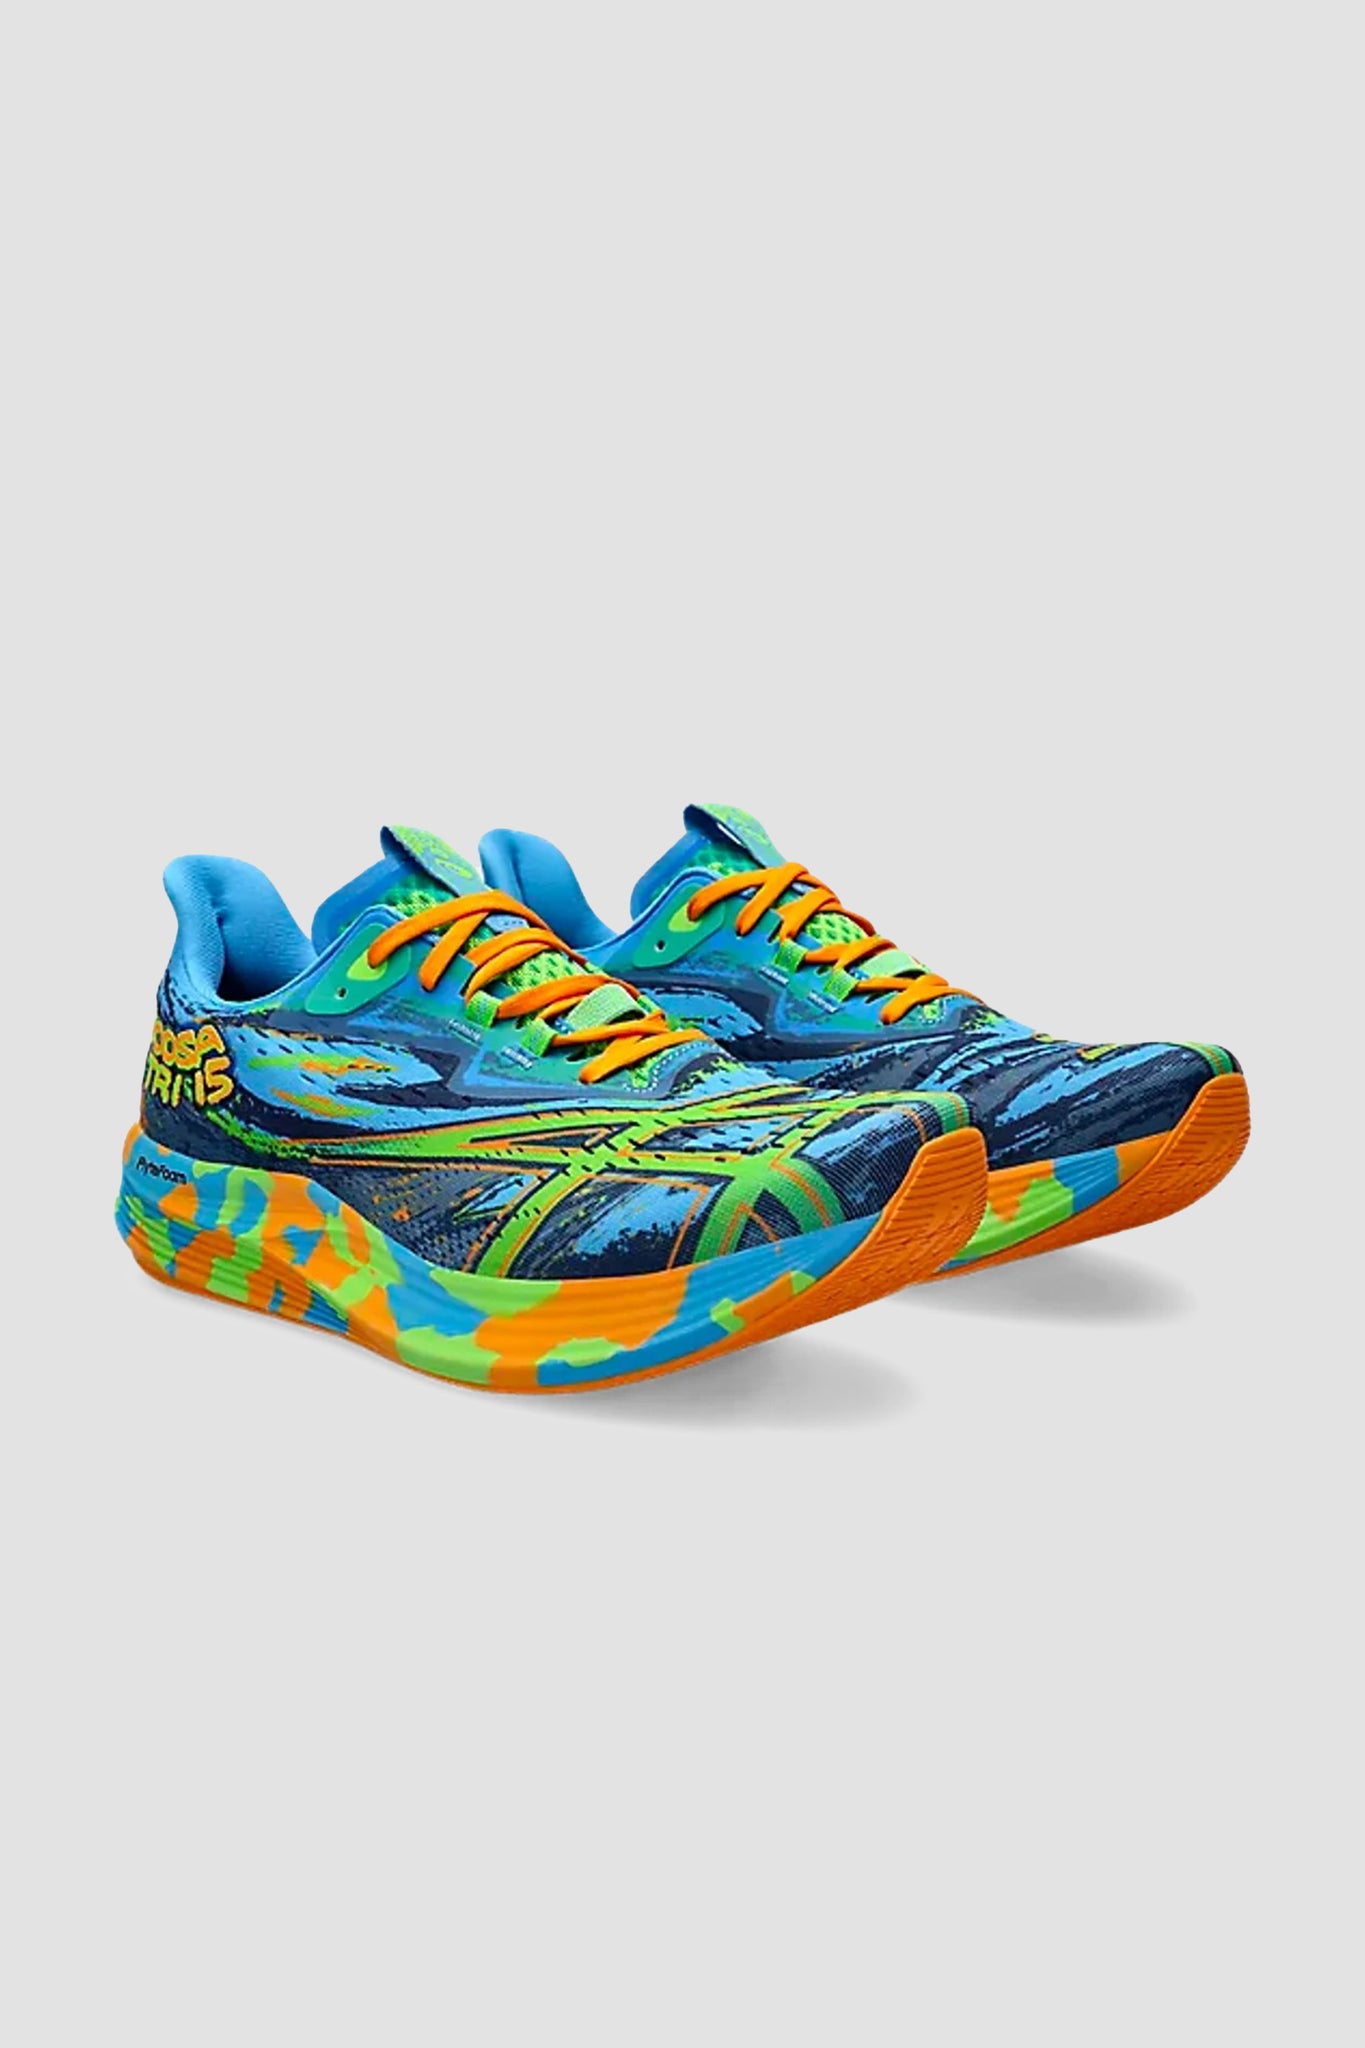 ASICS Men's Noosa Tri 15 Sneaker in Waterscape/Electric Lime